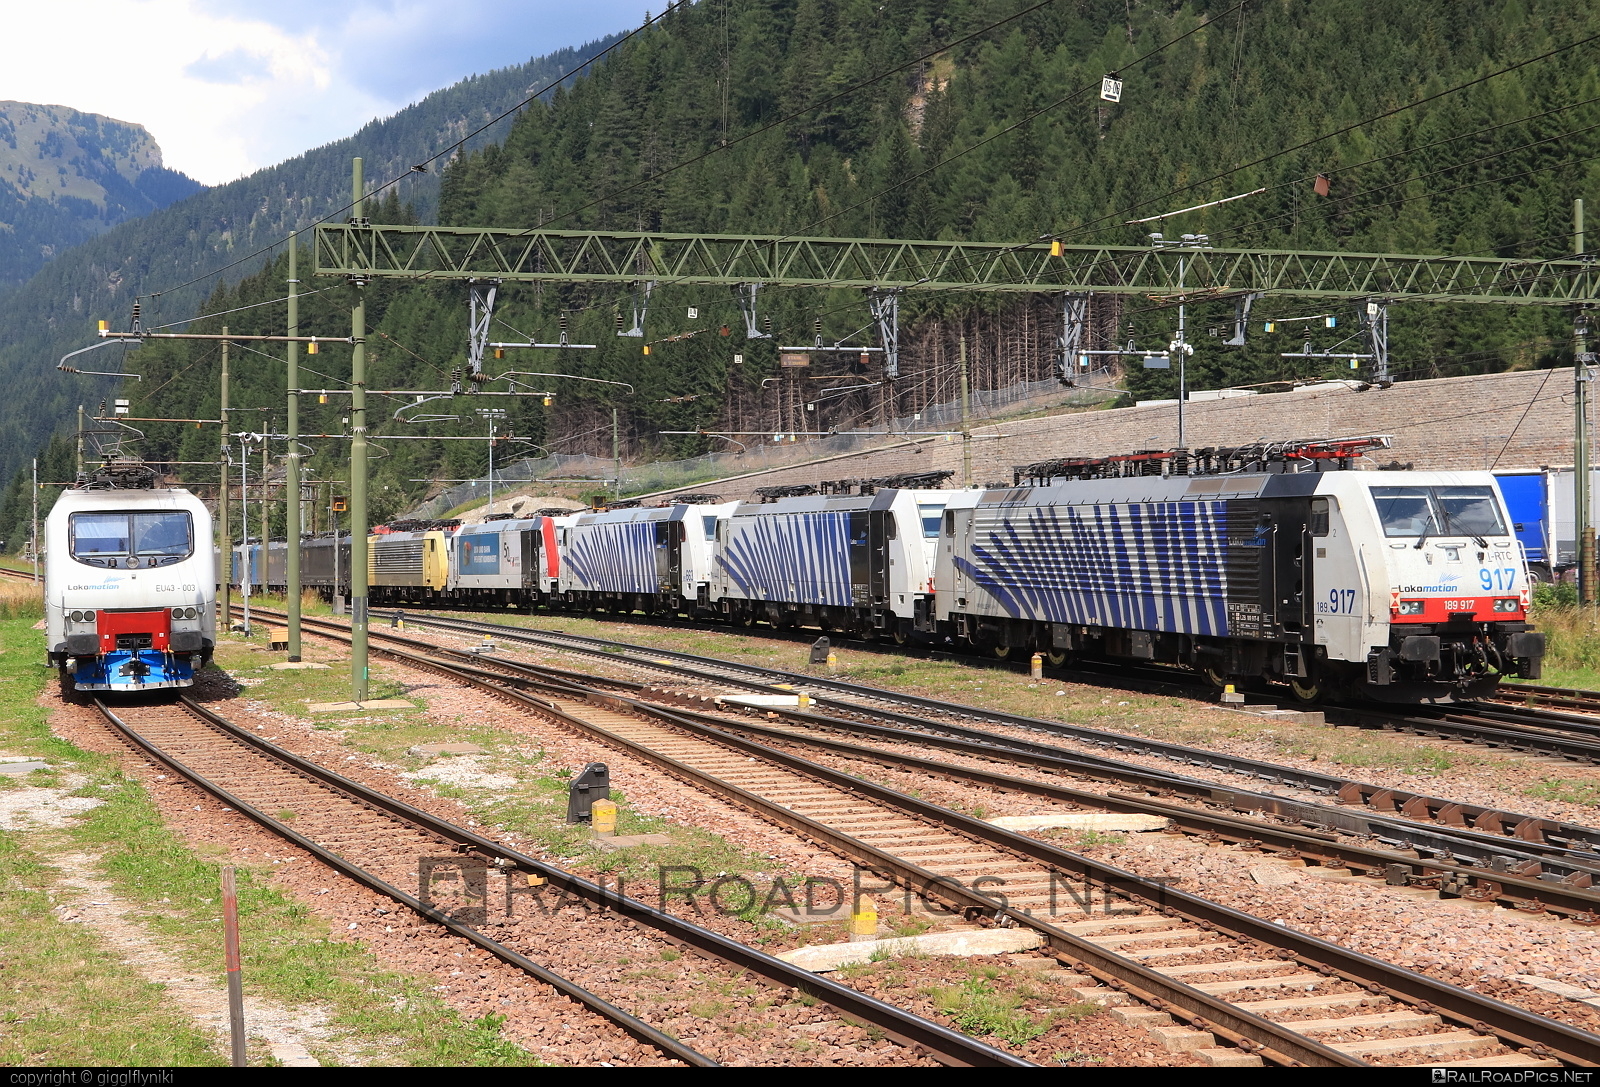 Siemens ES 64 F4 - 189 917 operated by Rail Traction Company #LokomotionGesellschaftFurSchienentraktion #RailTractionCompany #es64 #es64f4 #eurosprinter #lokomotion #rtc #siemens #siemensEs64 #siemensEs64f4